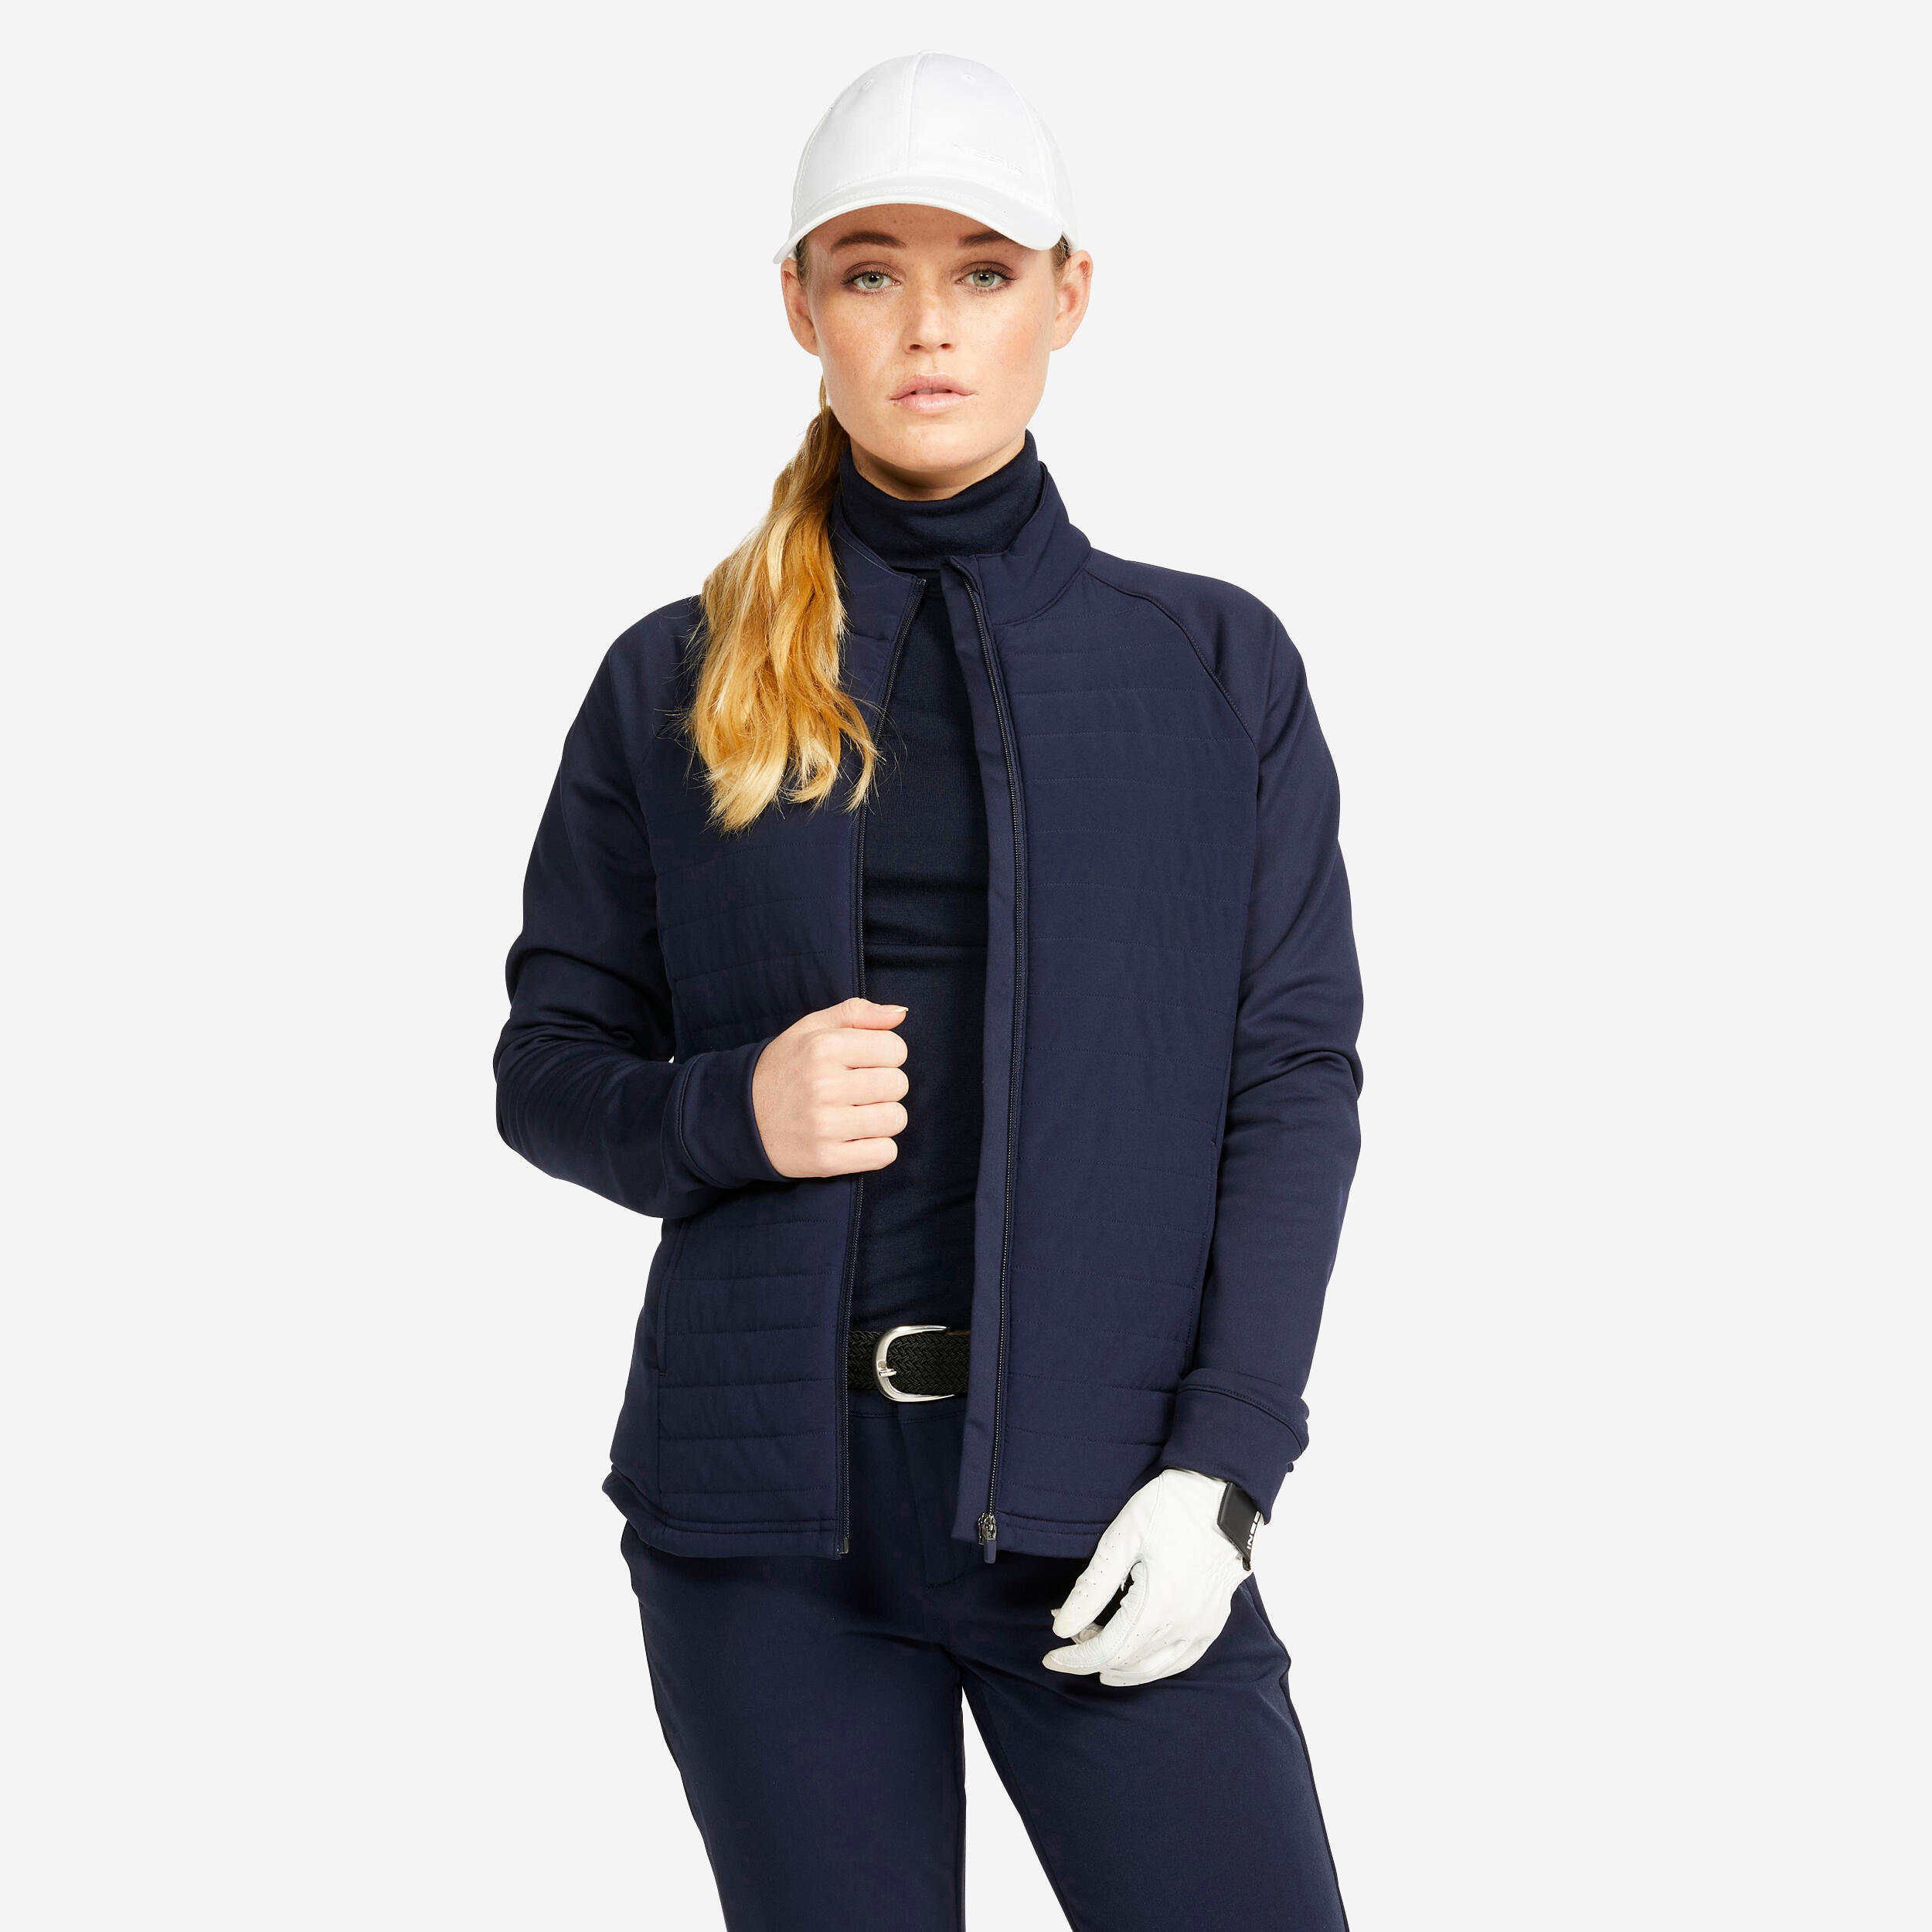 INESIS Women's winter golf jacket - CW500 navy blue